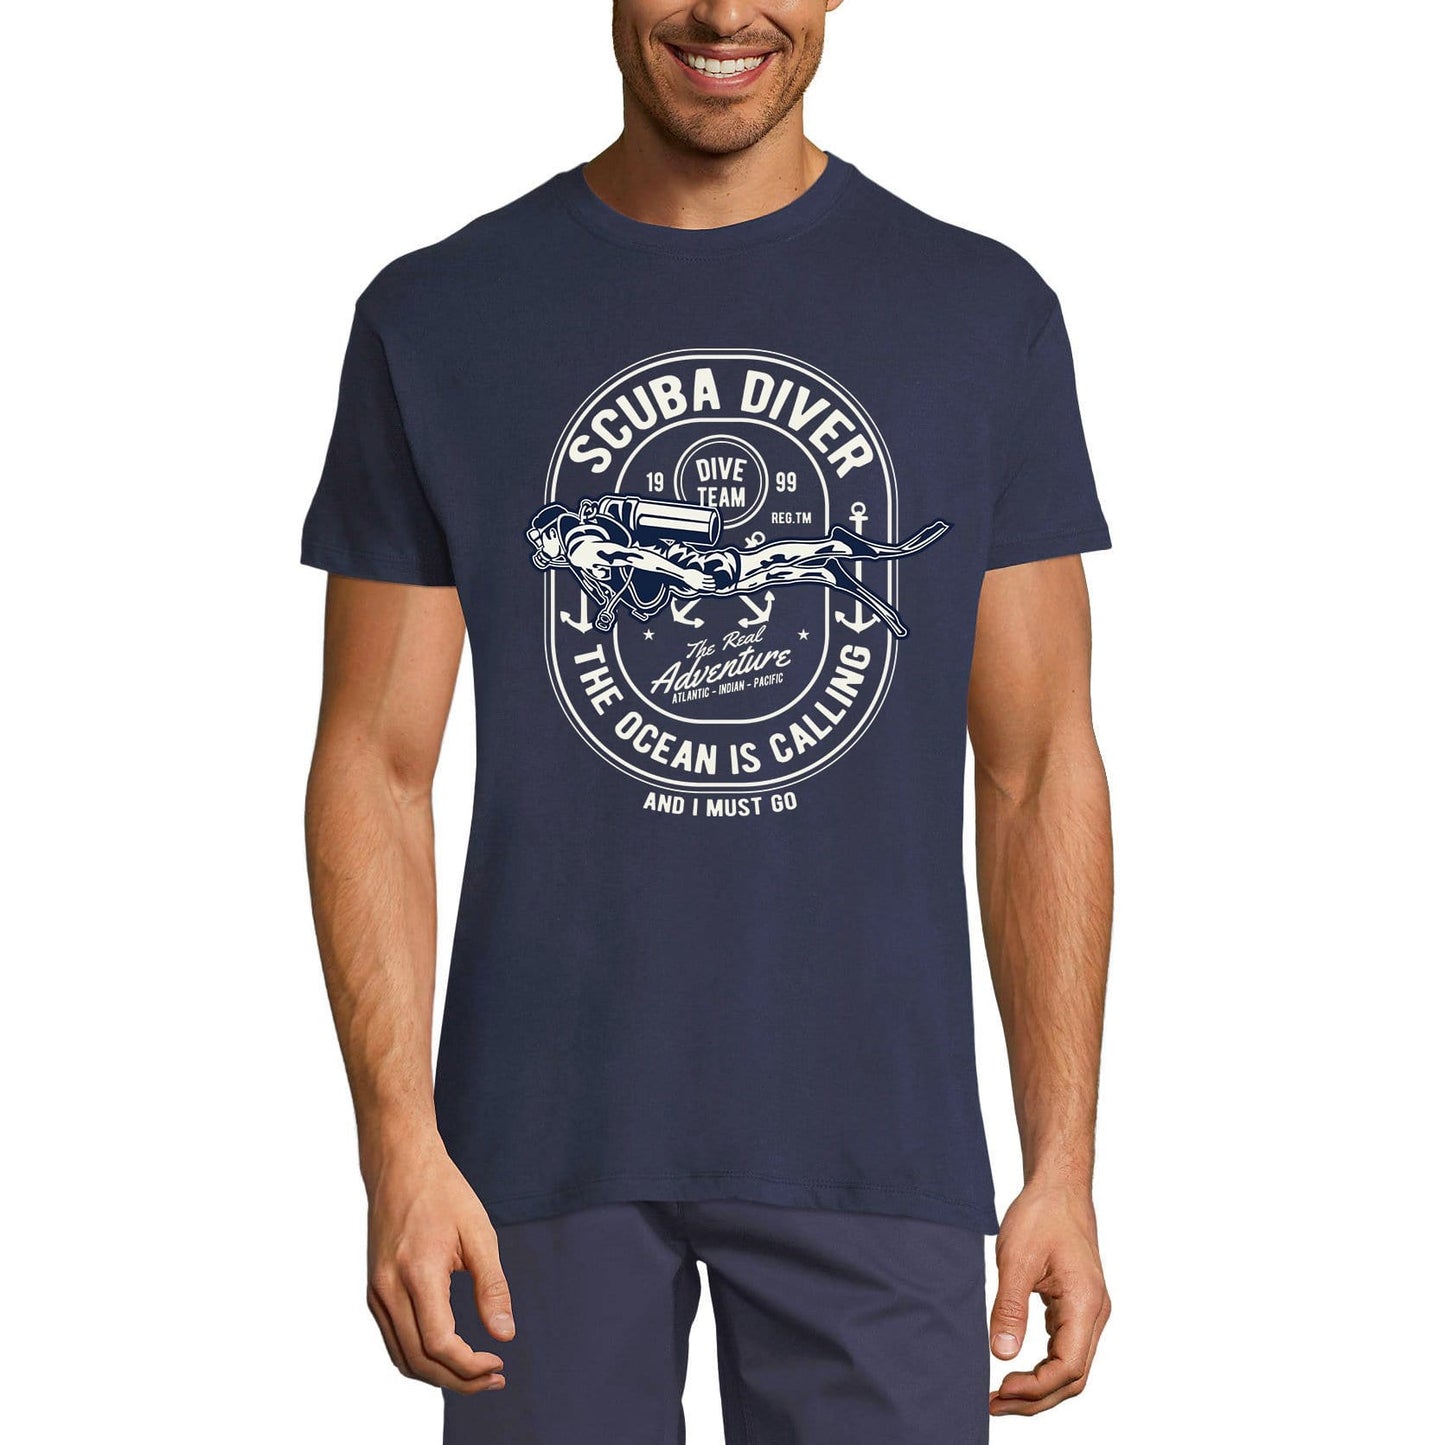 ULTRABASIC Men's T-Shirt Scuba Diver - Ocean is Calling - Dive Team Adventure Tee Shirt